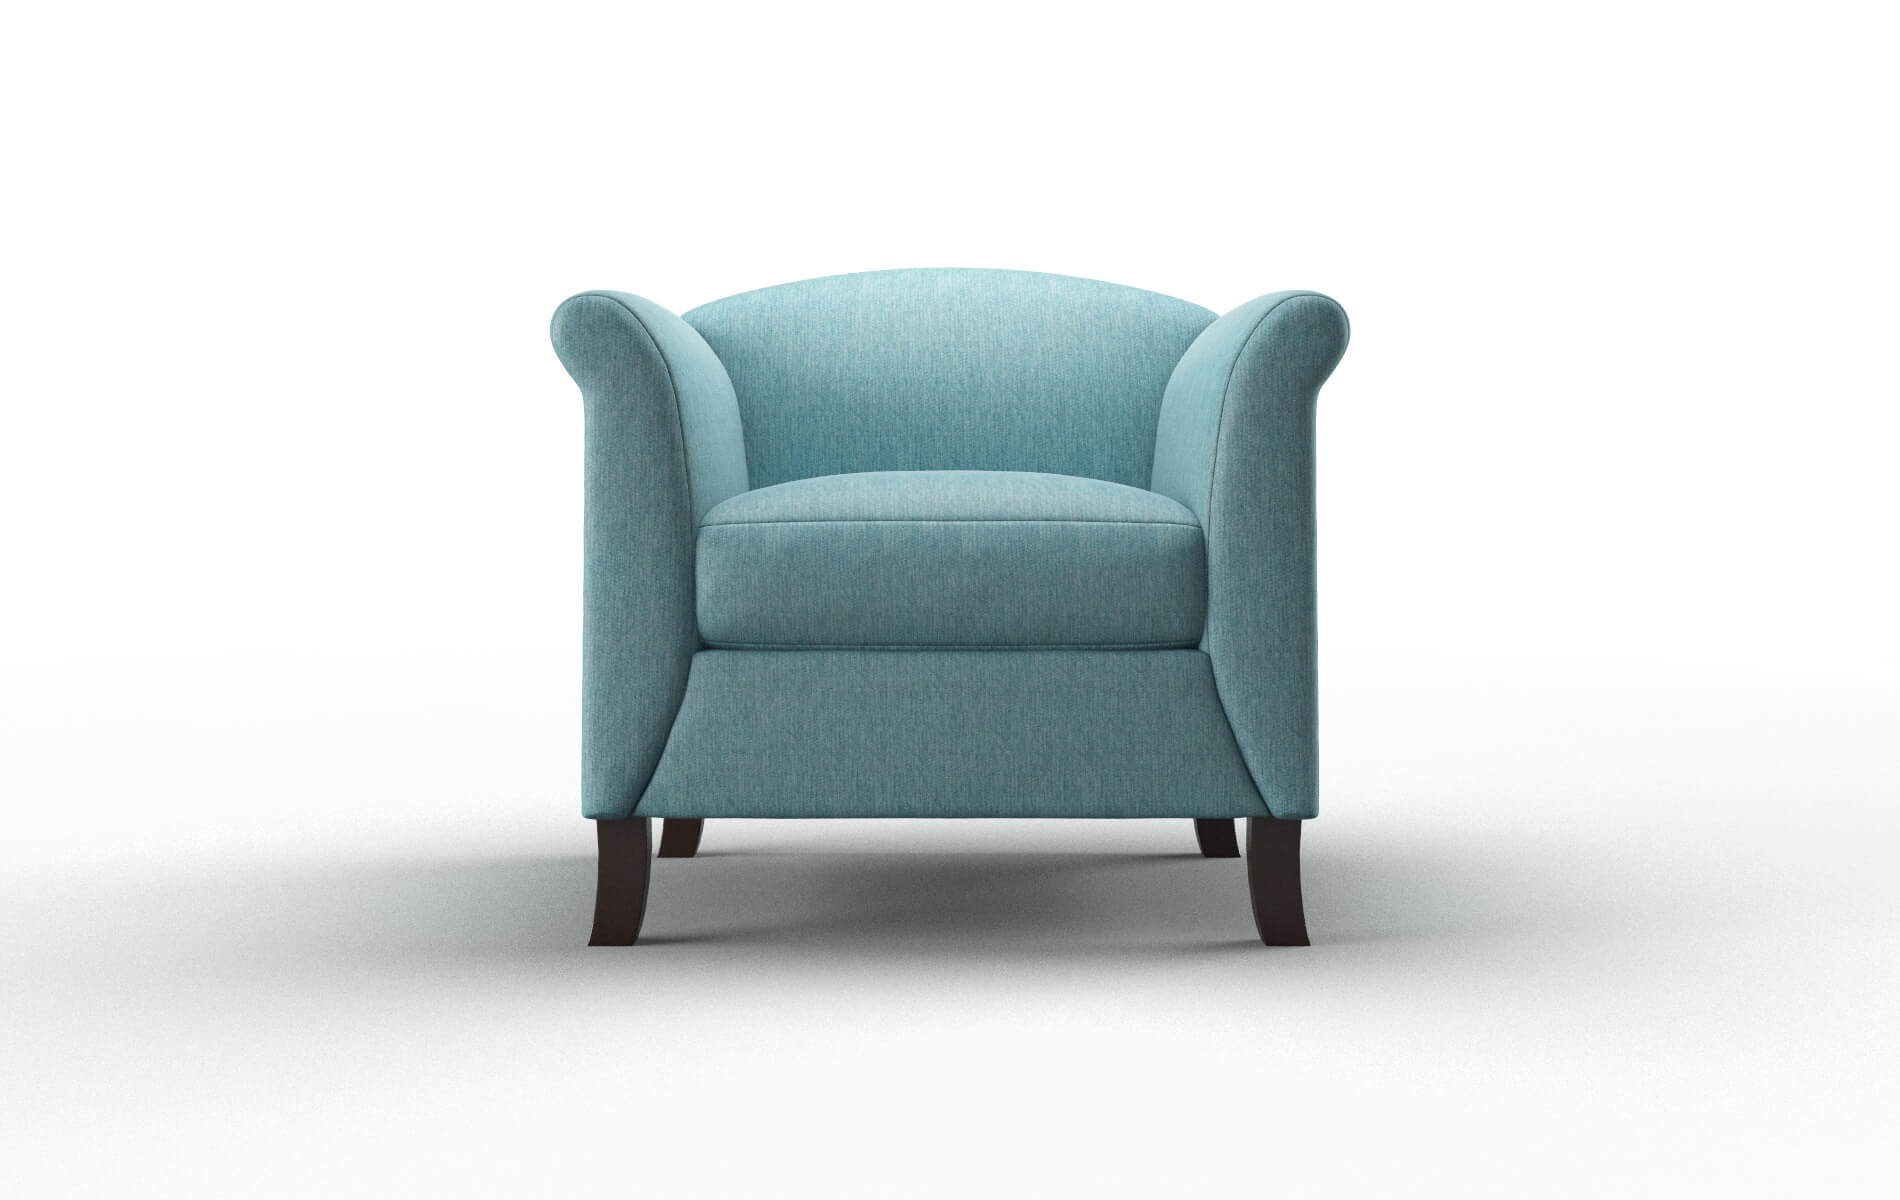 Crete Cosmo Turquoise Chair espresso legs 1